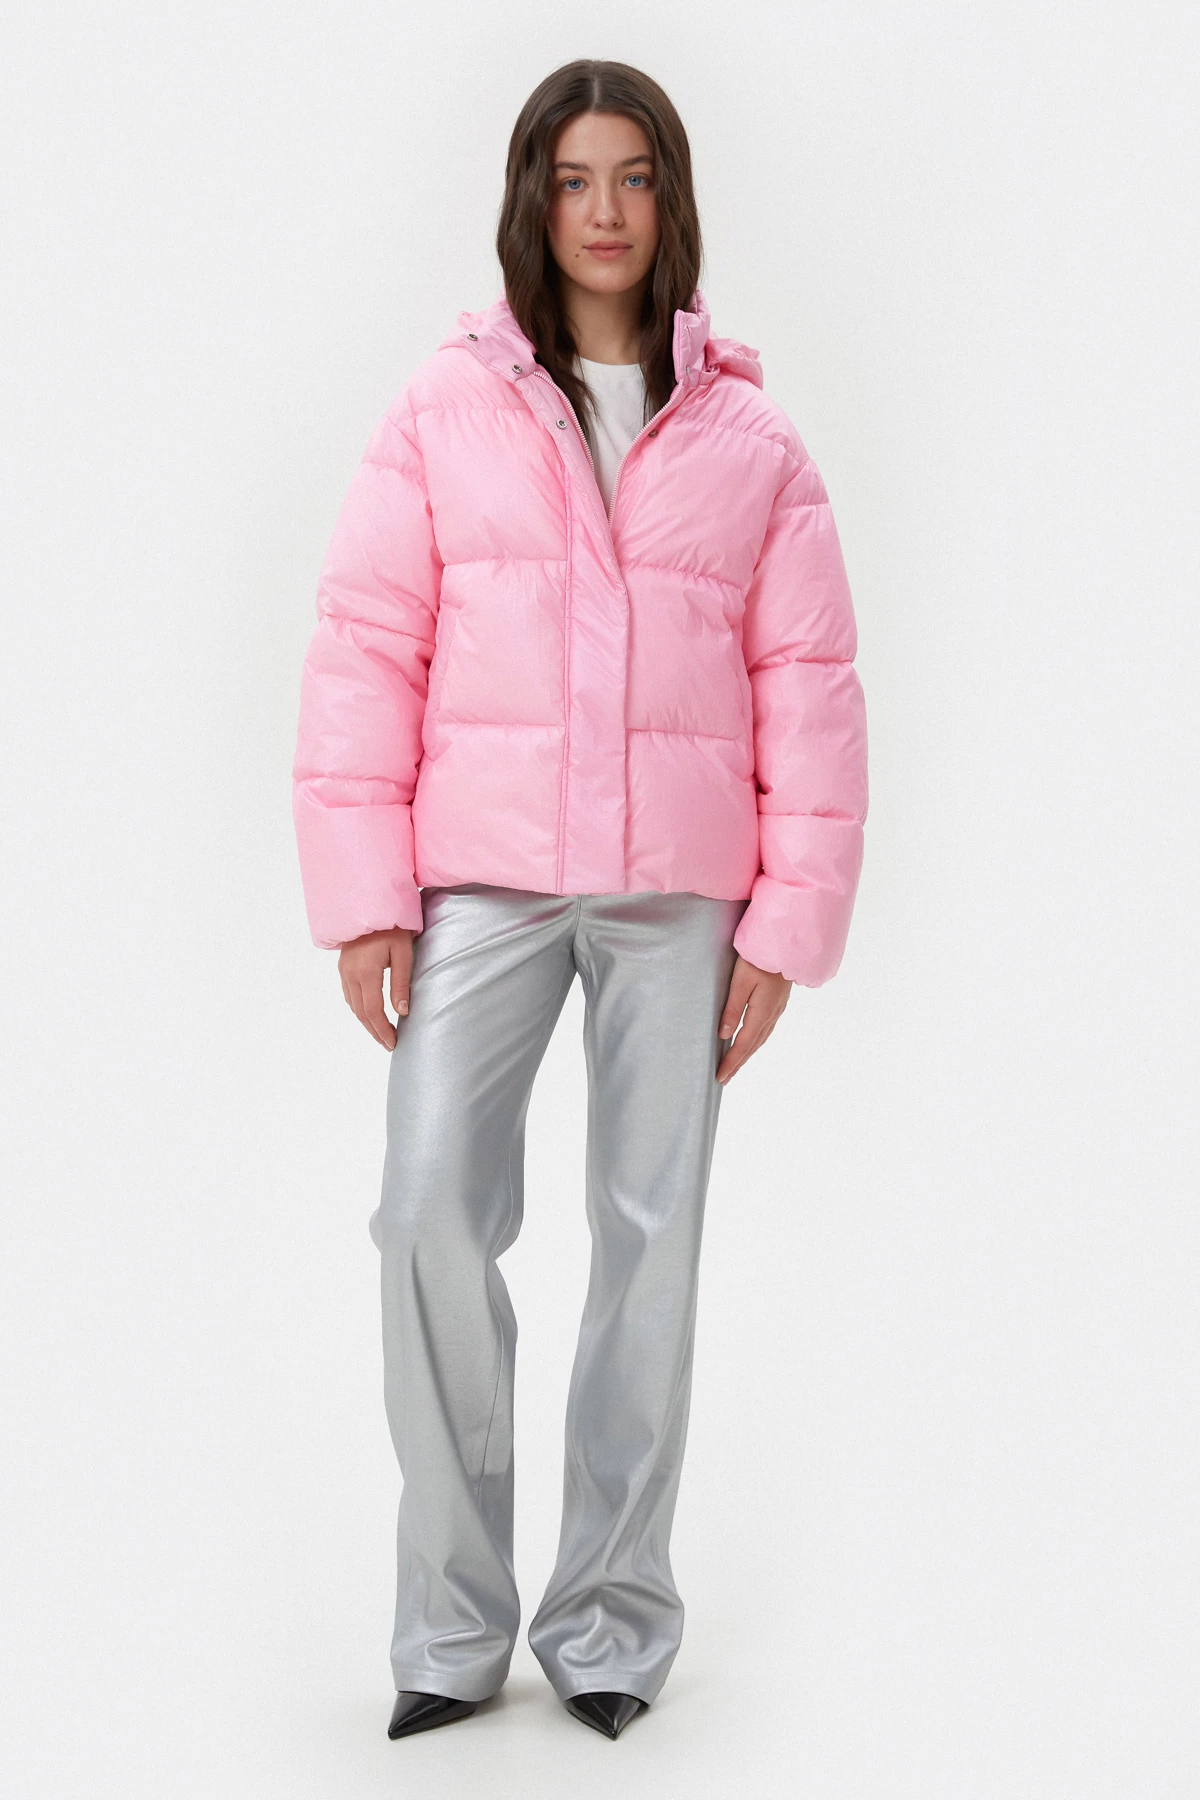 Soft pink cropped puffer jacket, photo 5